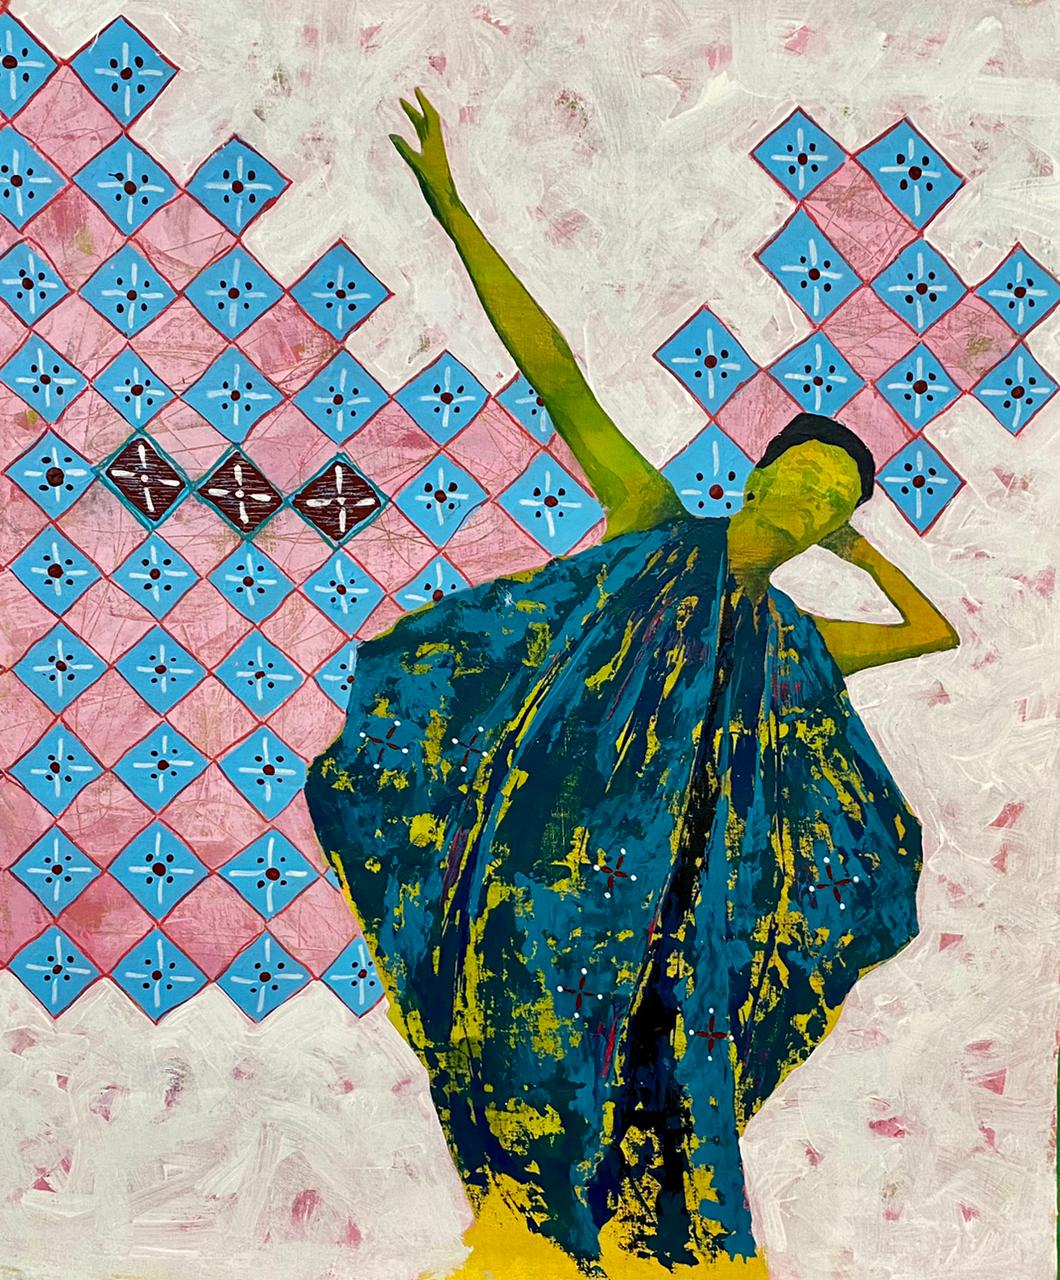 Jamal Bassiouni “Freedom without restraint”  2021 70 x 60 cm Acrylic on canvas, JB204